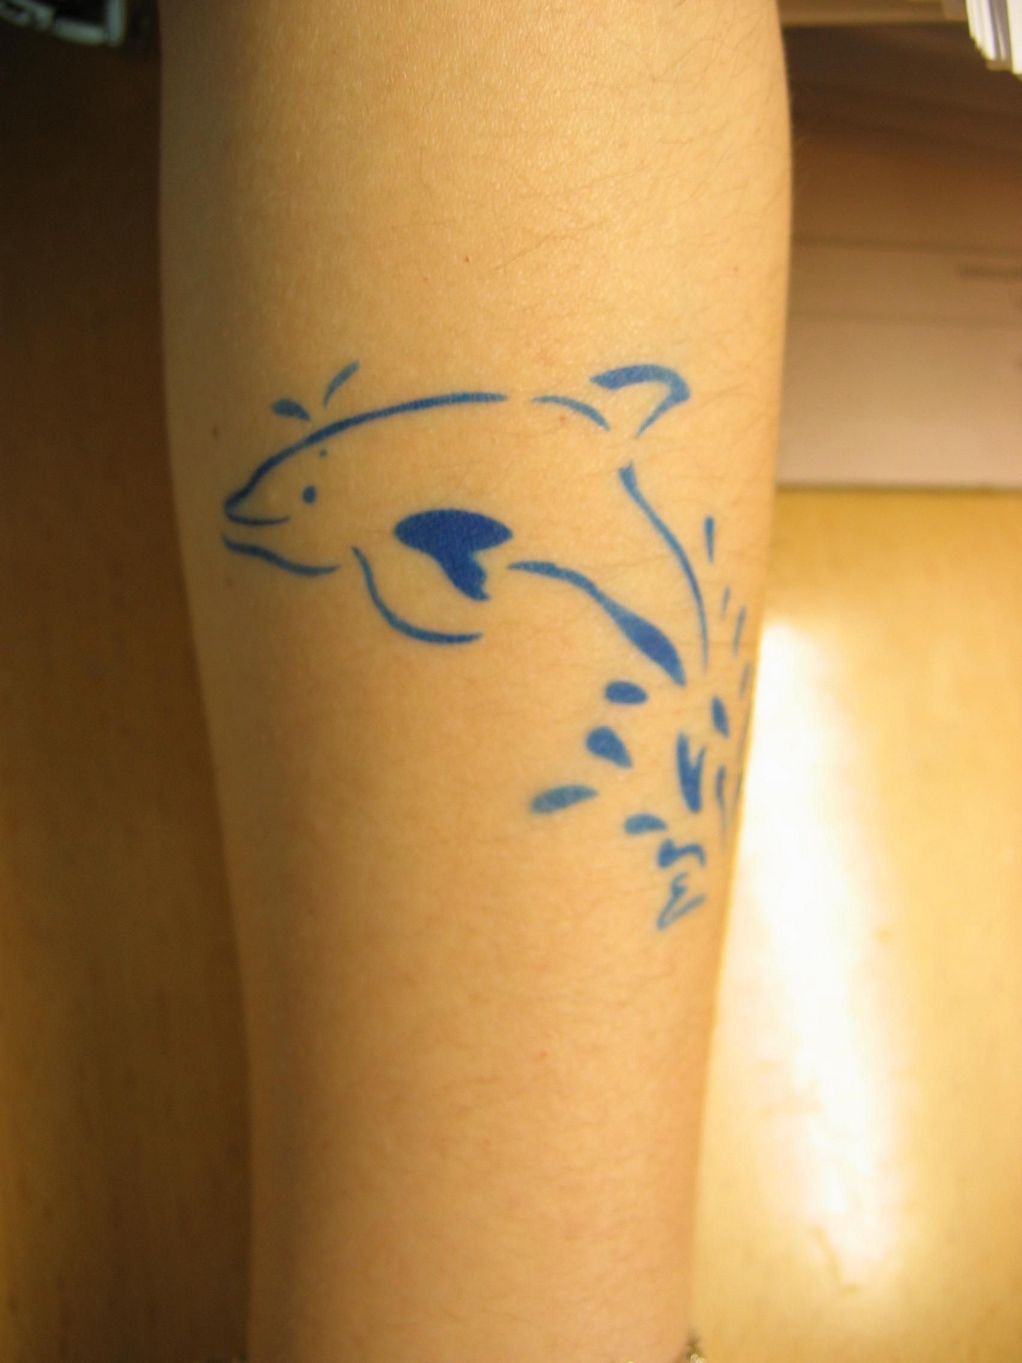 Simple tatuaje el delfín azul en el agua